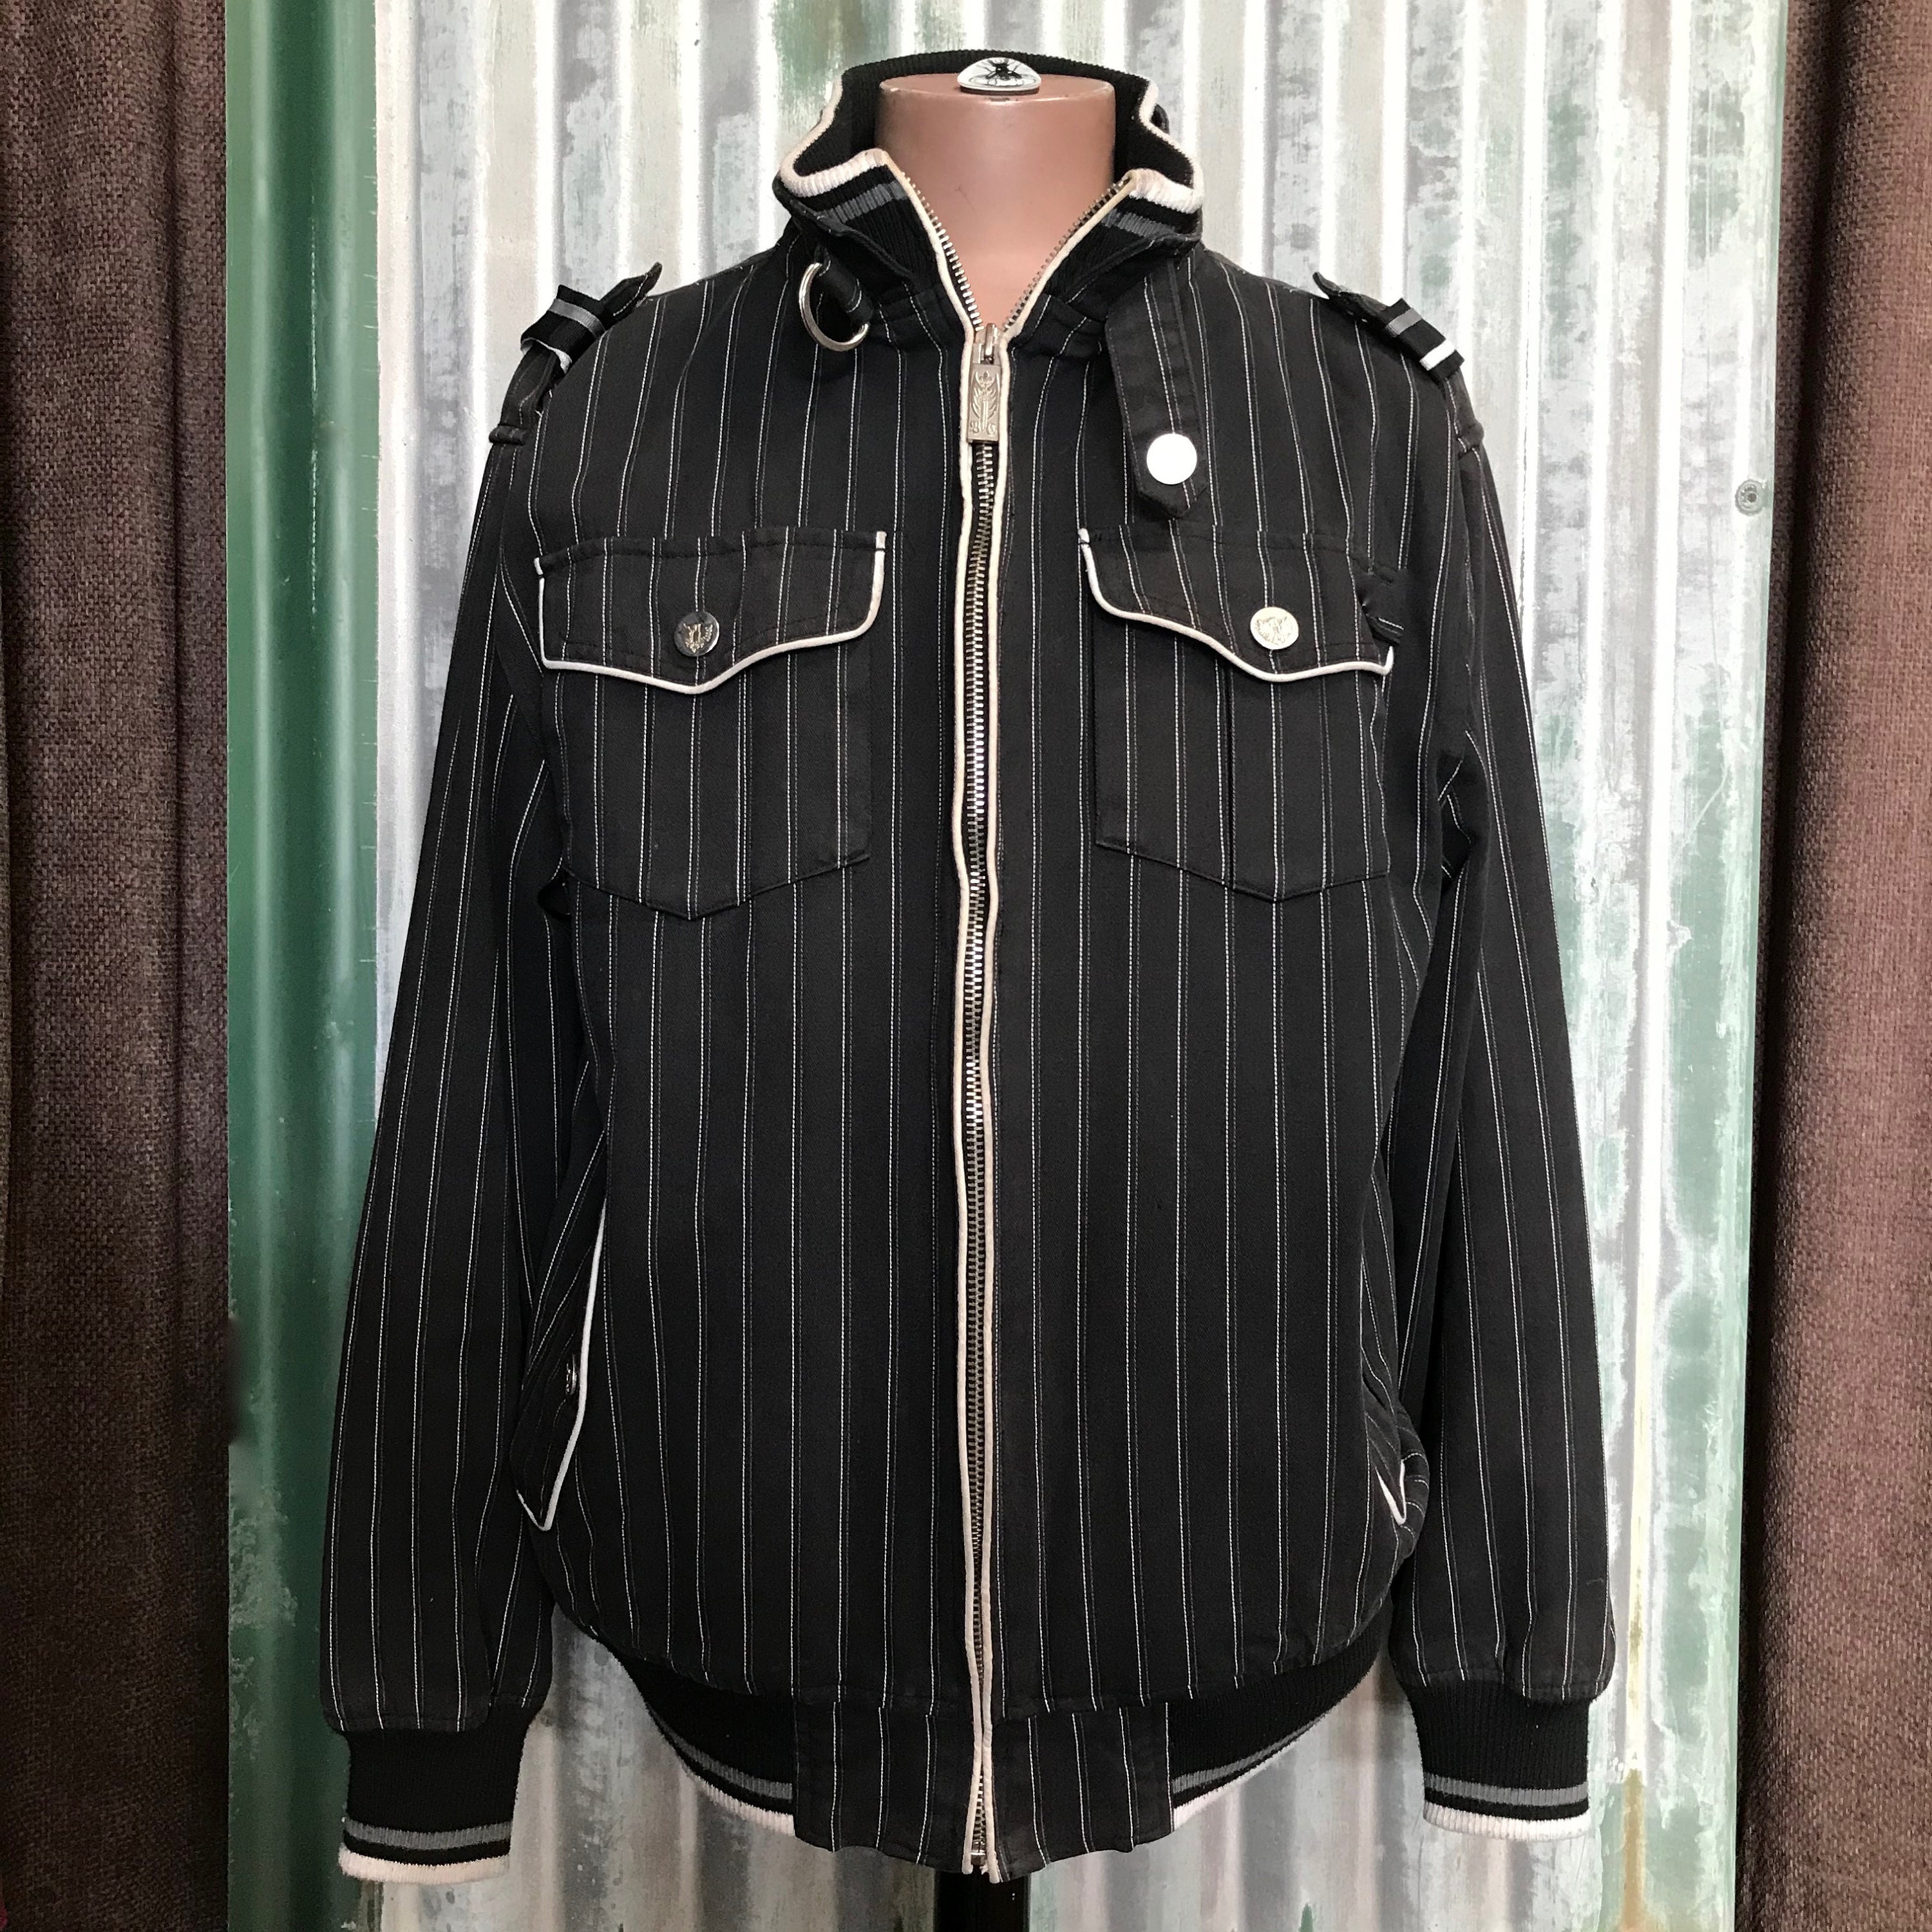 Preloved Black Pinstripe Jacket Sz L OOAK | Etsy